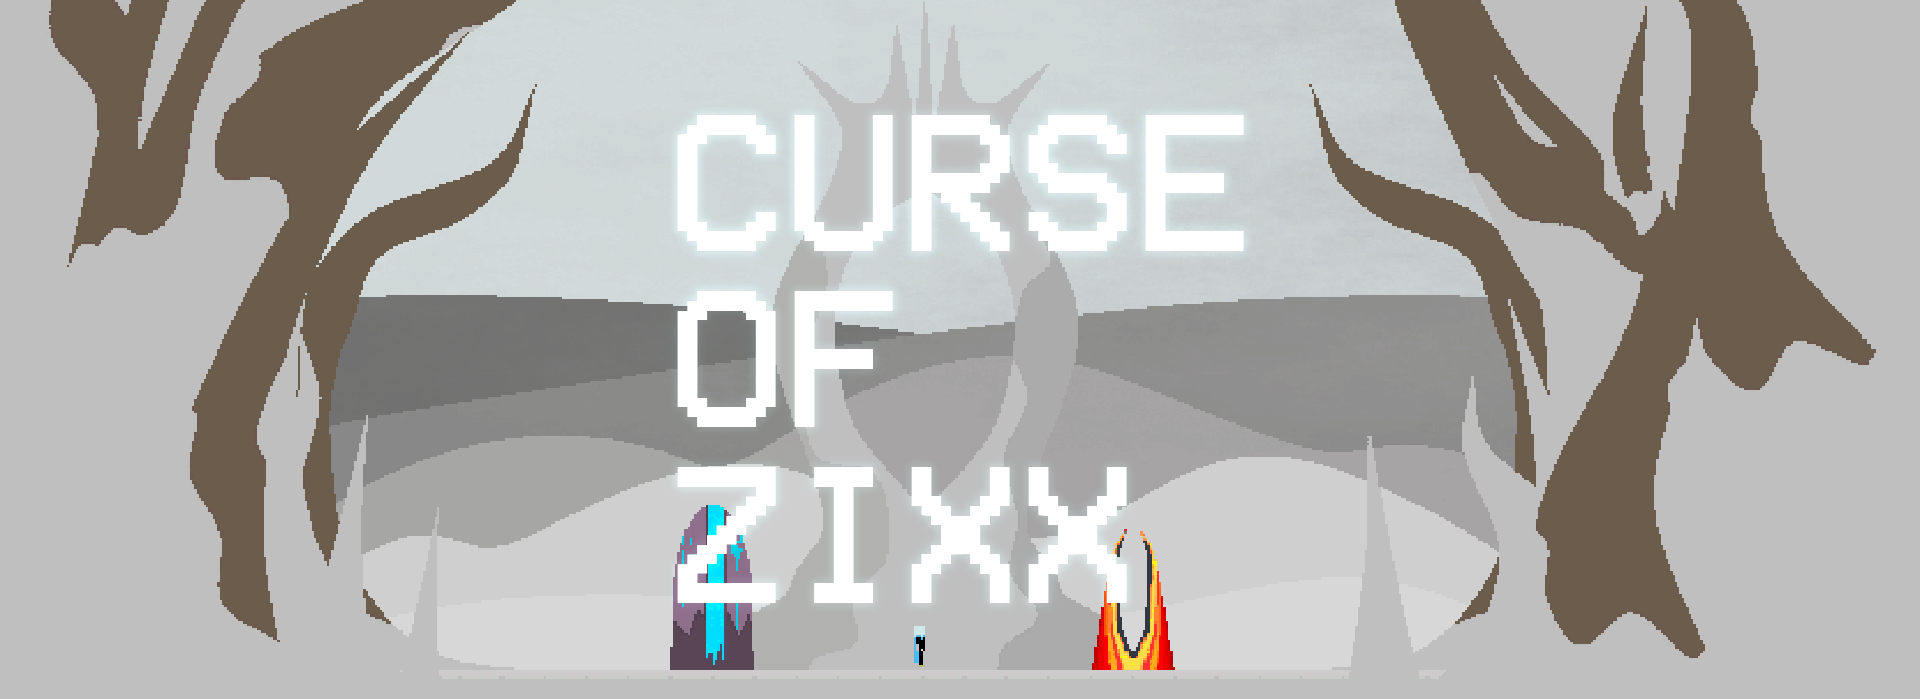 Curse of Zixx Demo